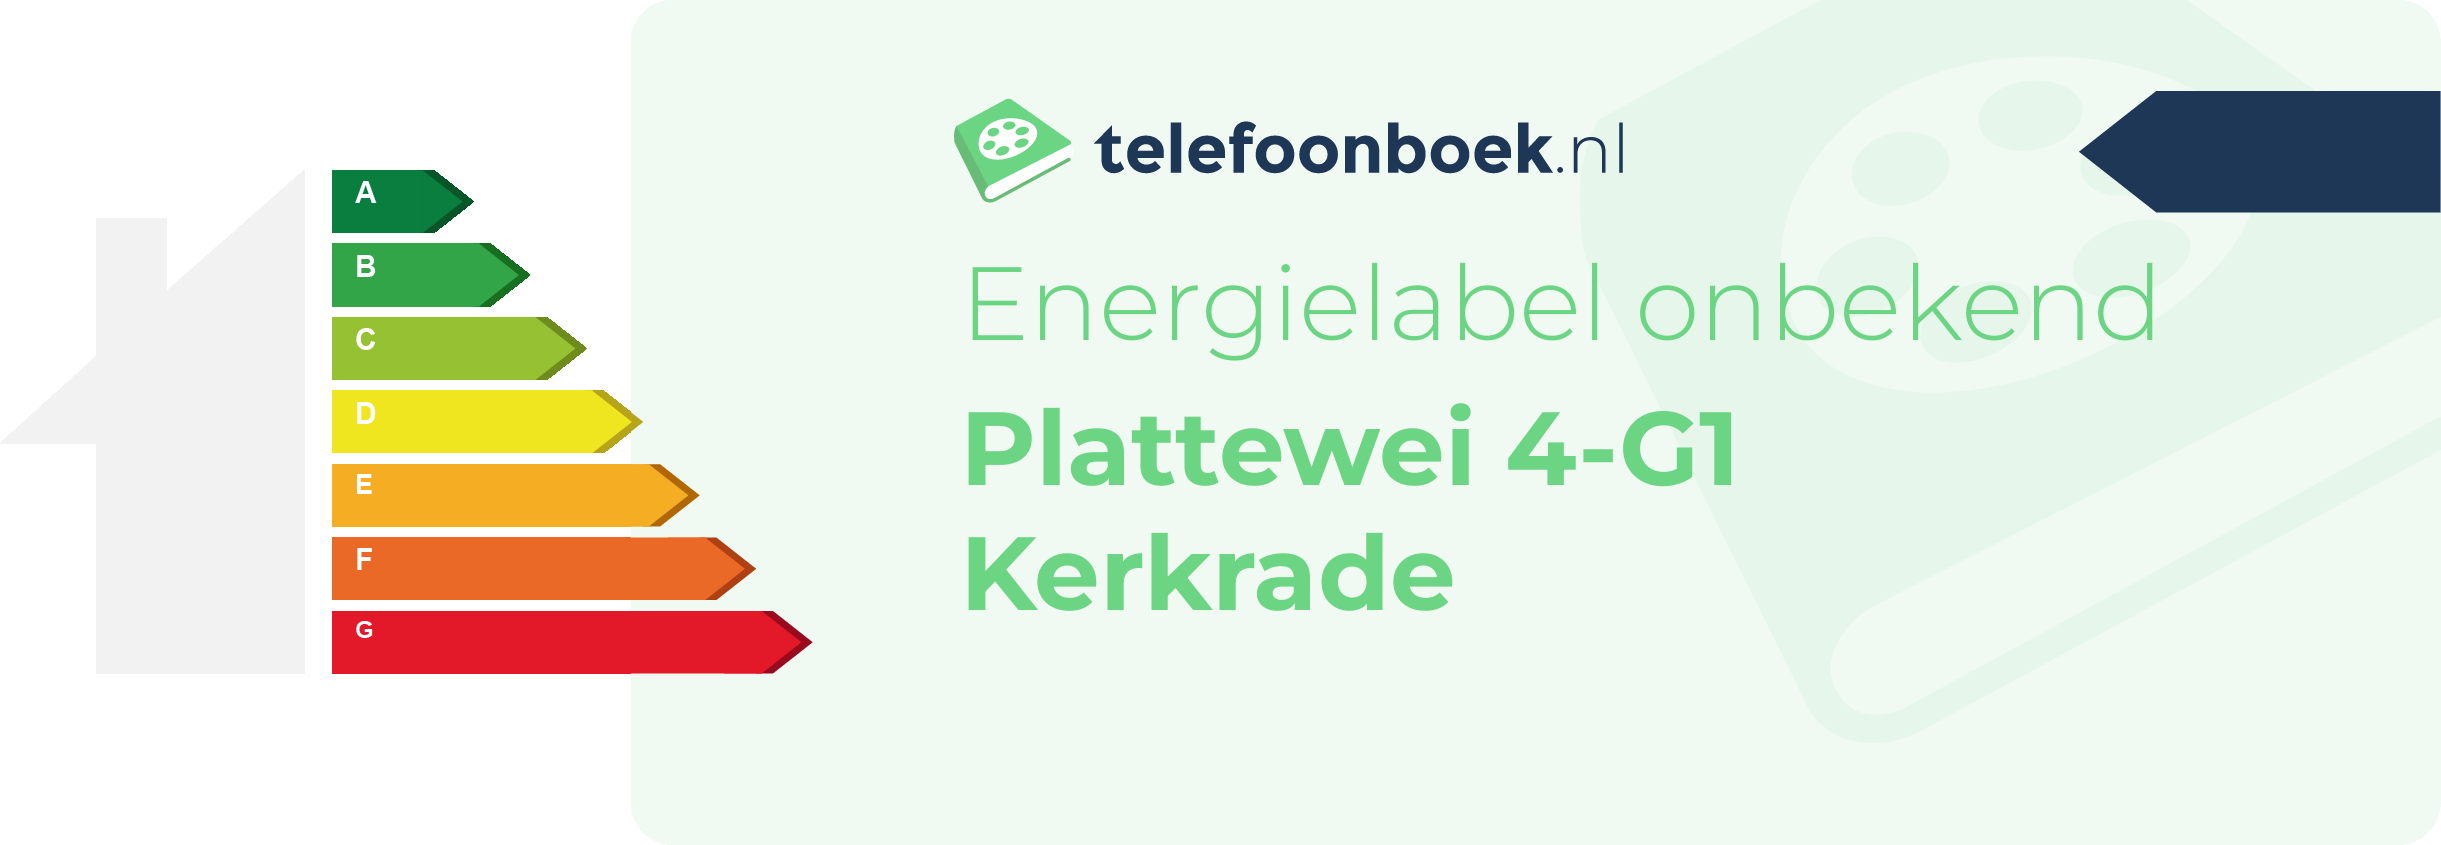 Energielabel Plattewei 4-G1 Kerkrade